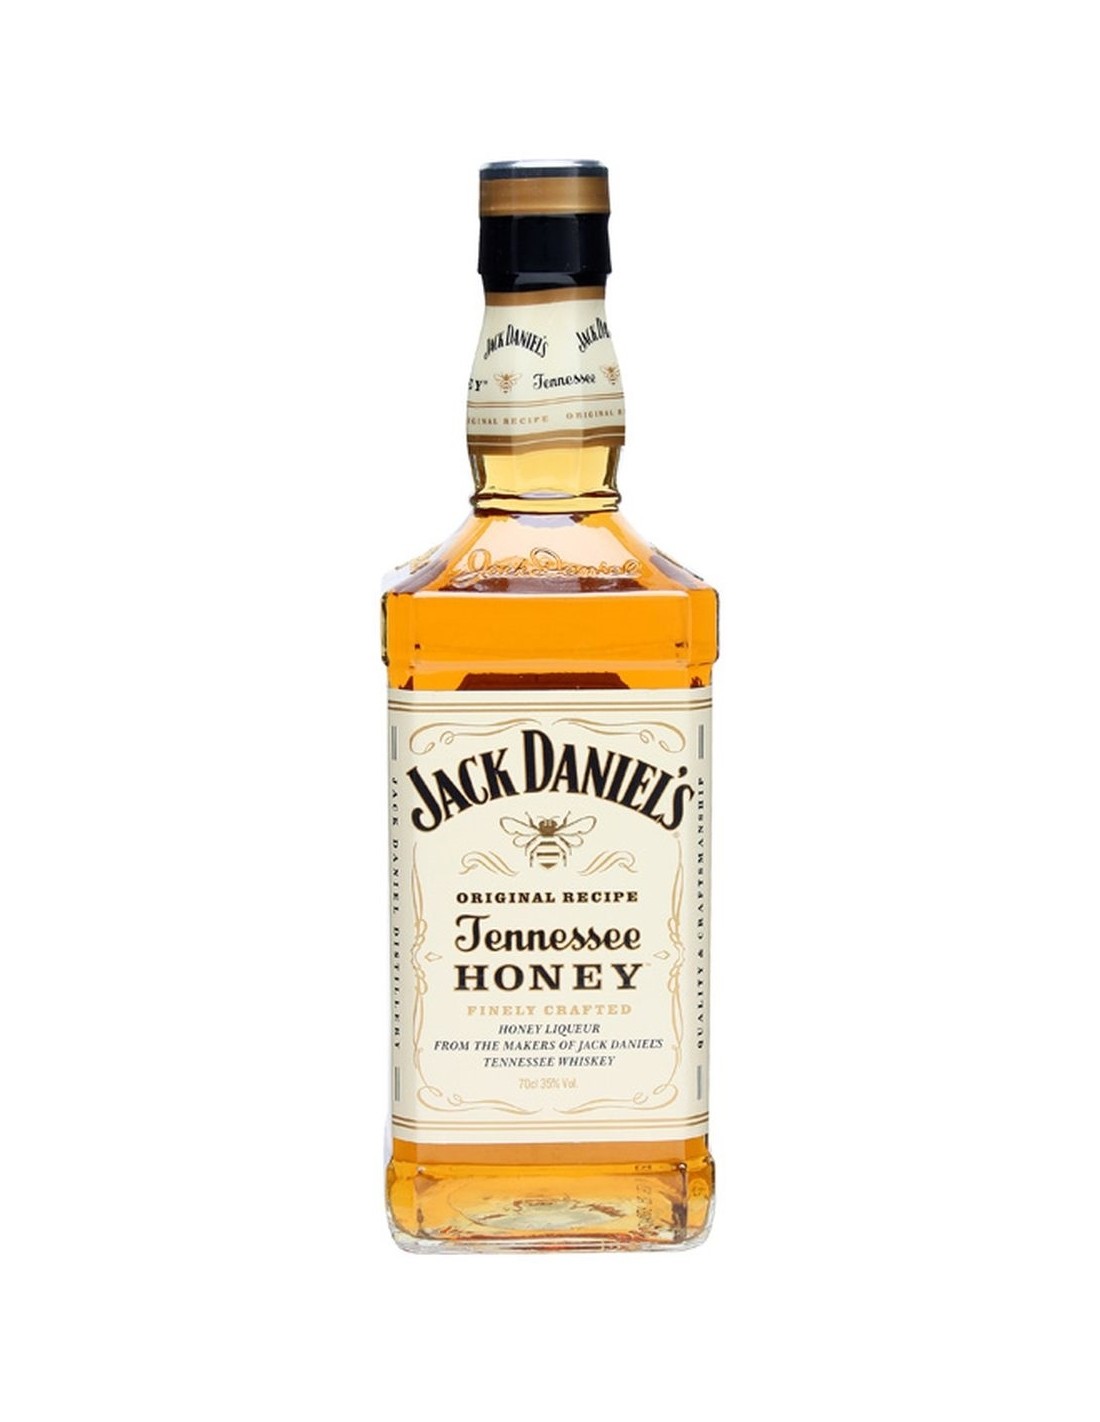 Whisky Jack Daniel’s Honey, 0.7L, 35% alc., SUA alcooldiscount.ro